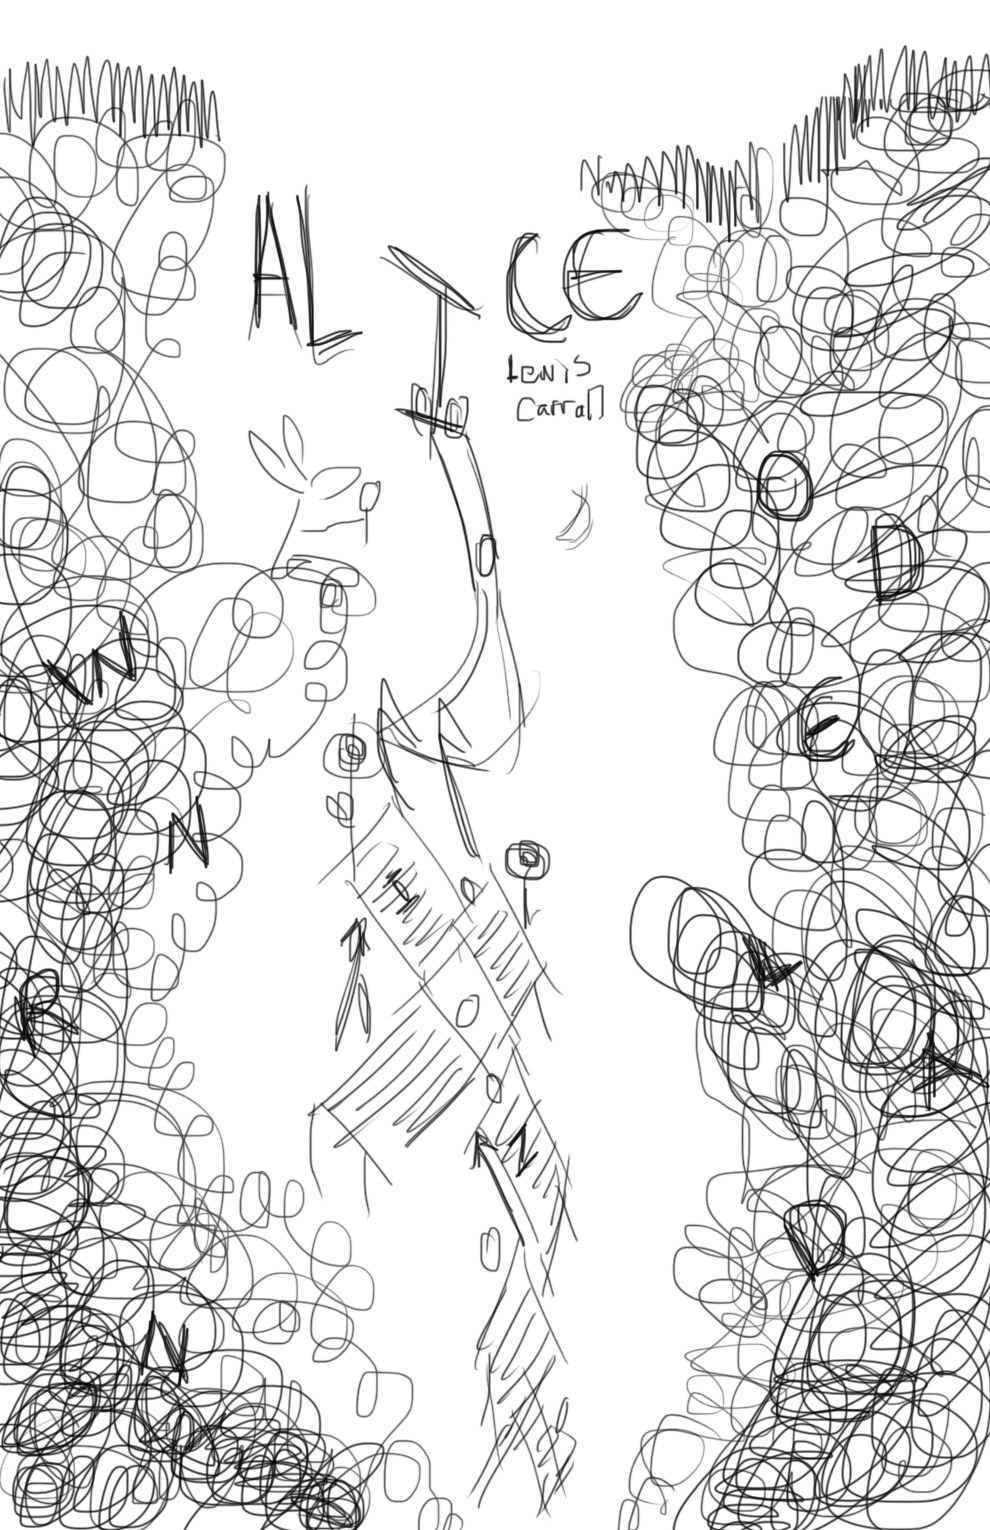 BOOK COVER -Alice in Wonderland thumbnail.jpg